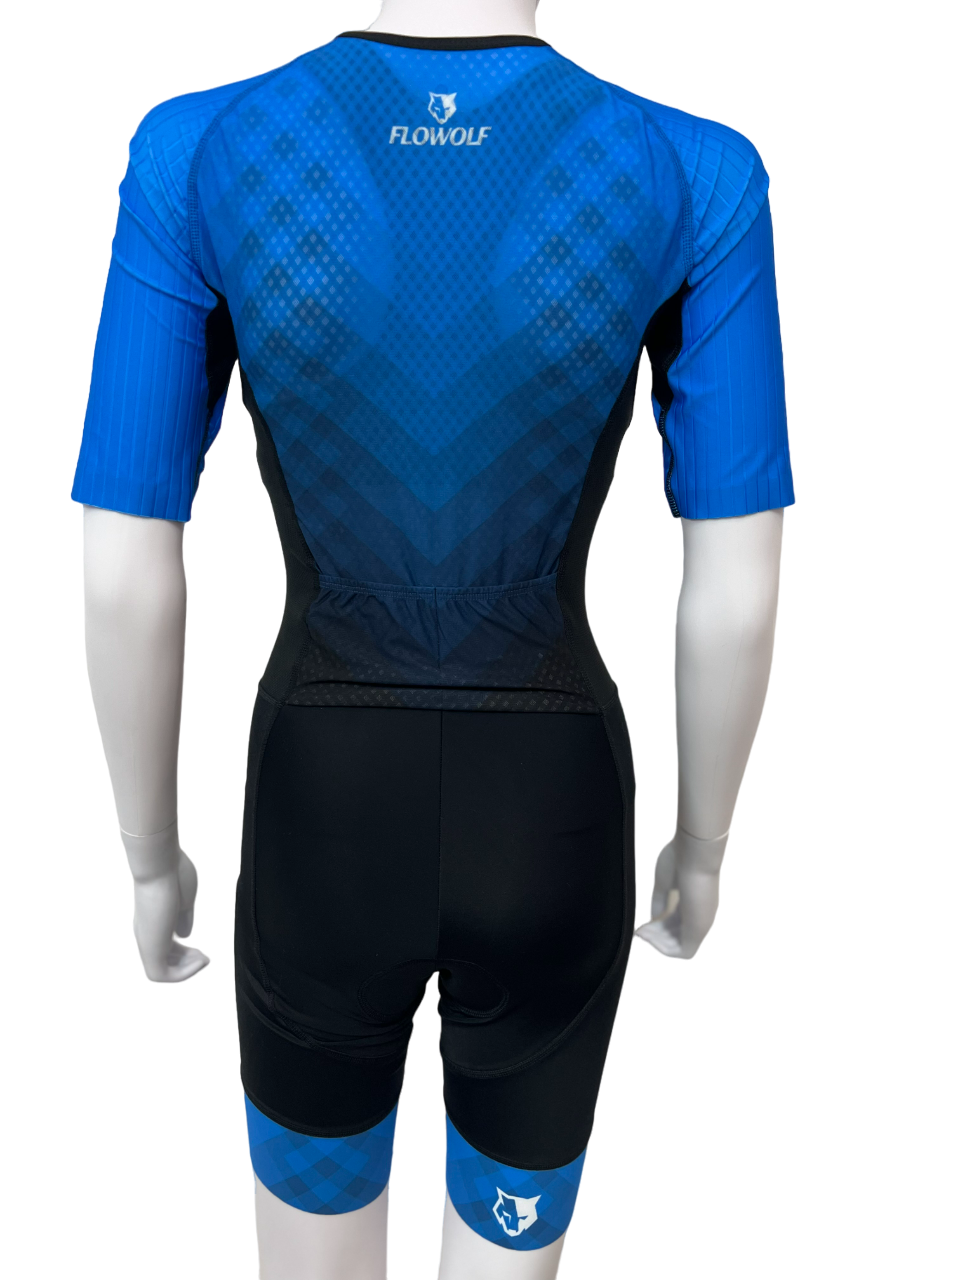 FLOWOLF SS Women's Triathlon Race Suit - Blue